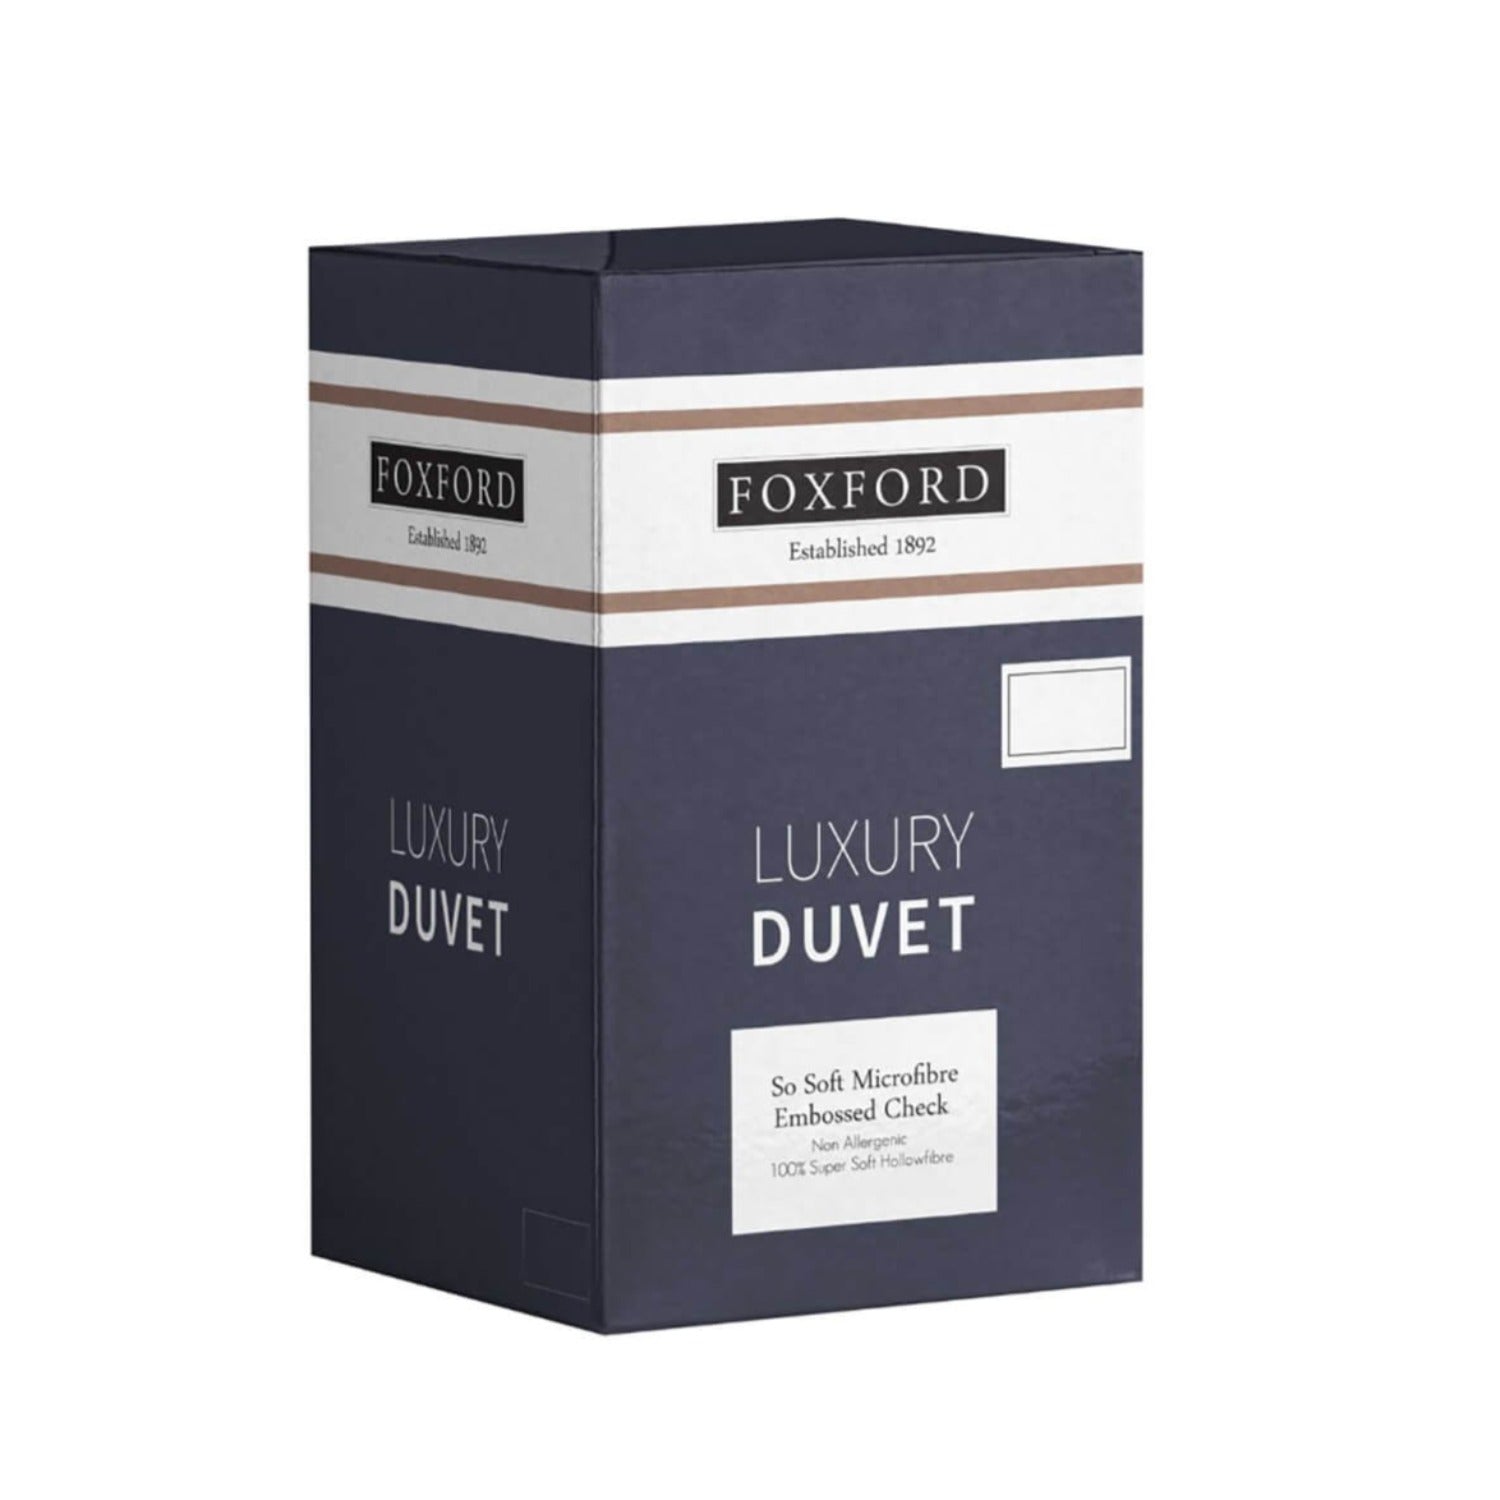 Foxford Luxury Duvet 13.5 Tog 1 Shaws Department Stores